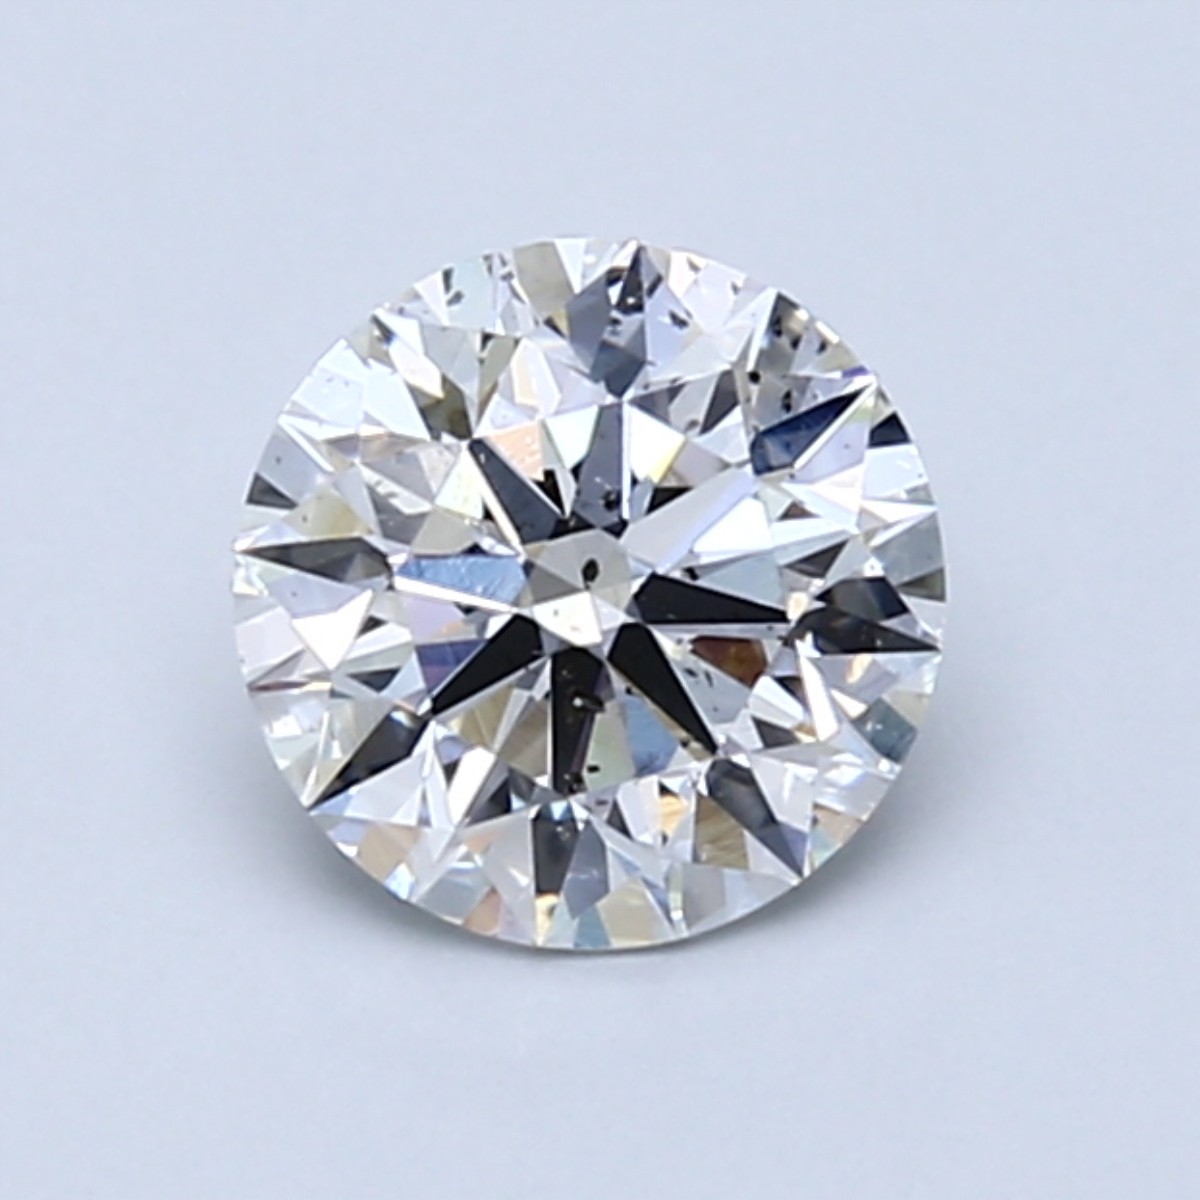 SI2 diamond with dark inclusions